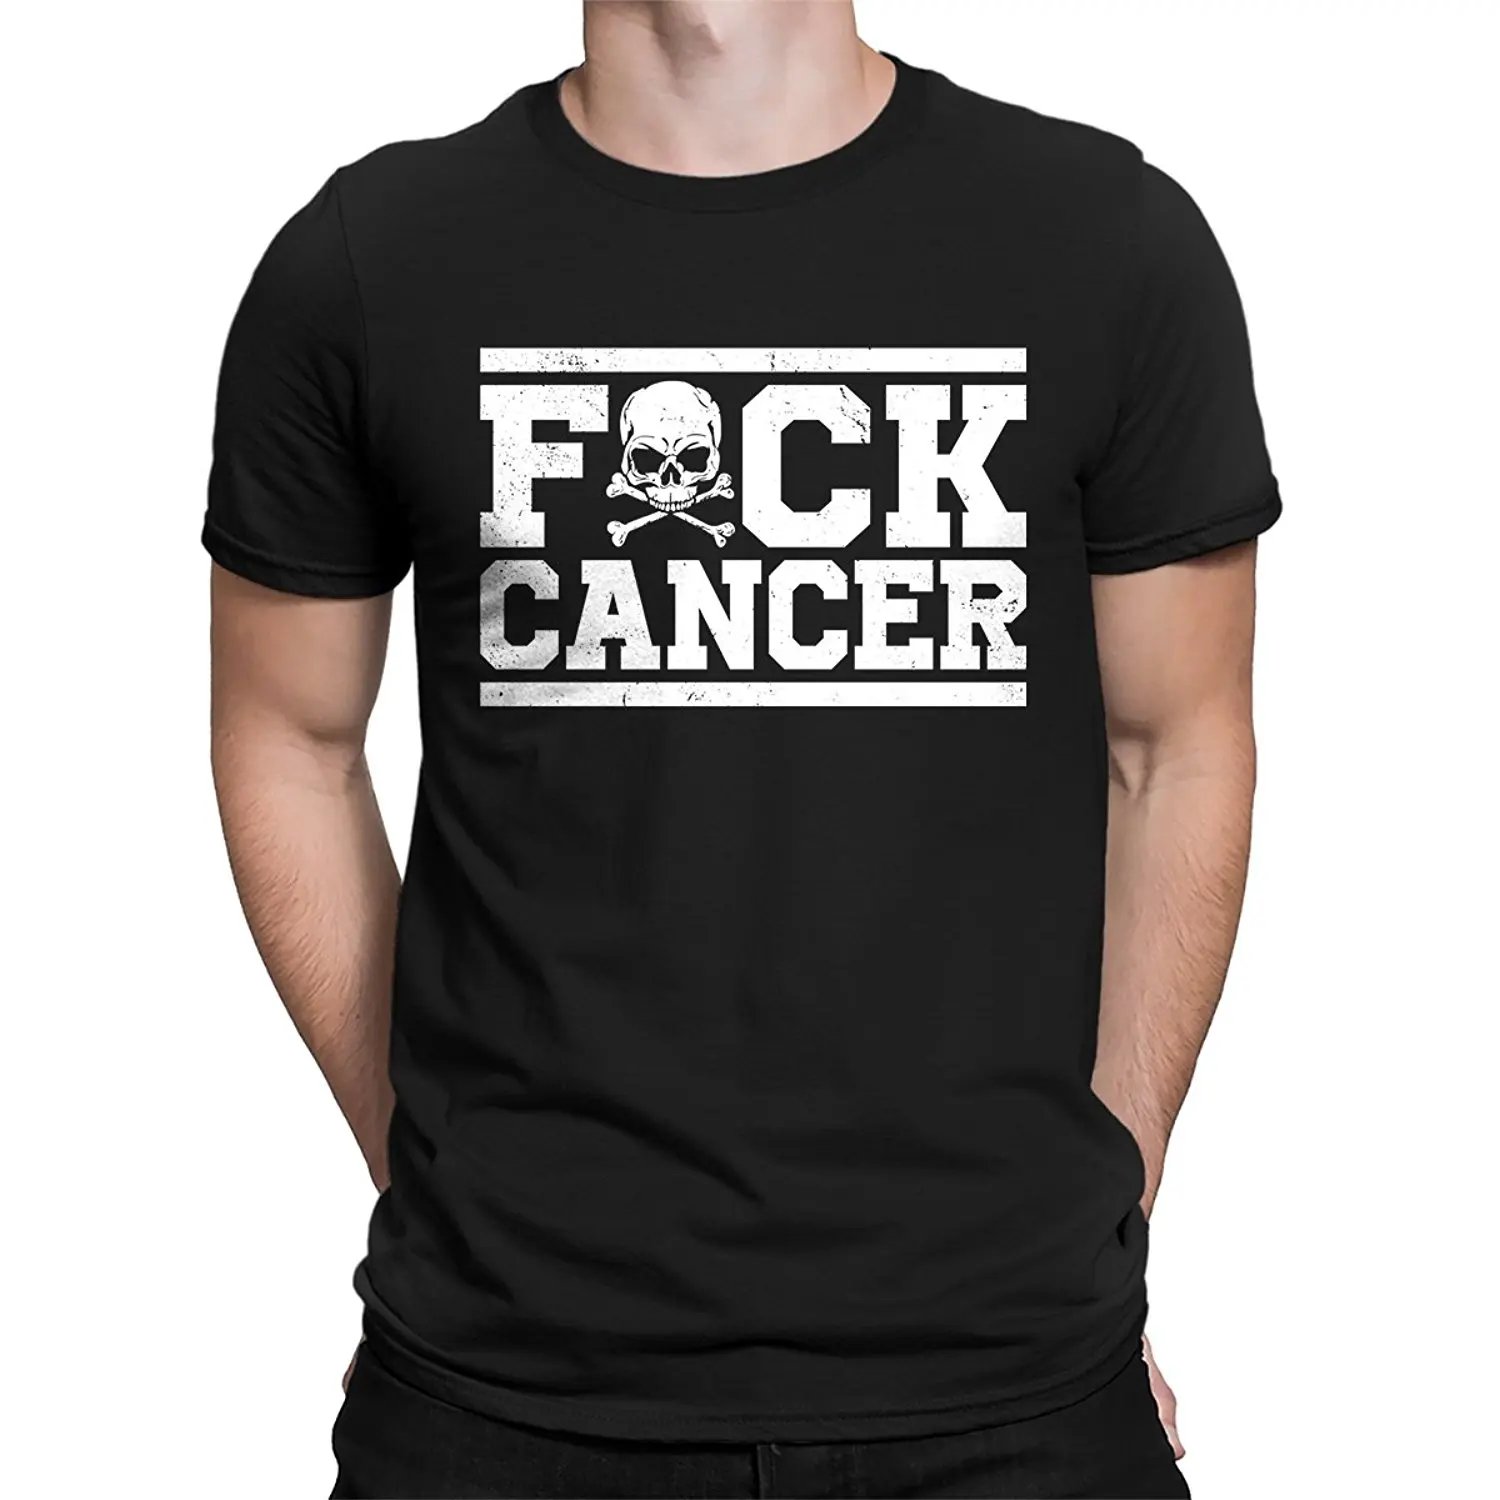 

2019 New Cool Tee Shirt Cancer Skull & Crossbones Men's T-Shirt Fashion Cotton T-shirt